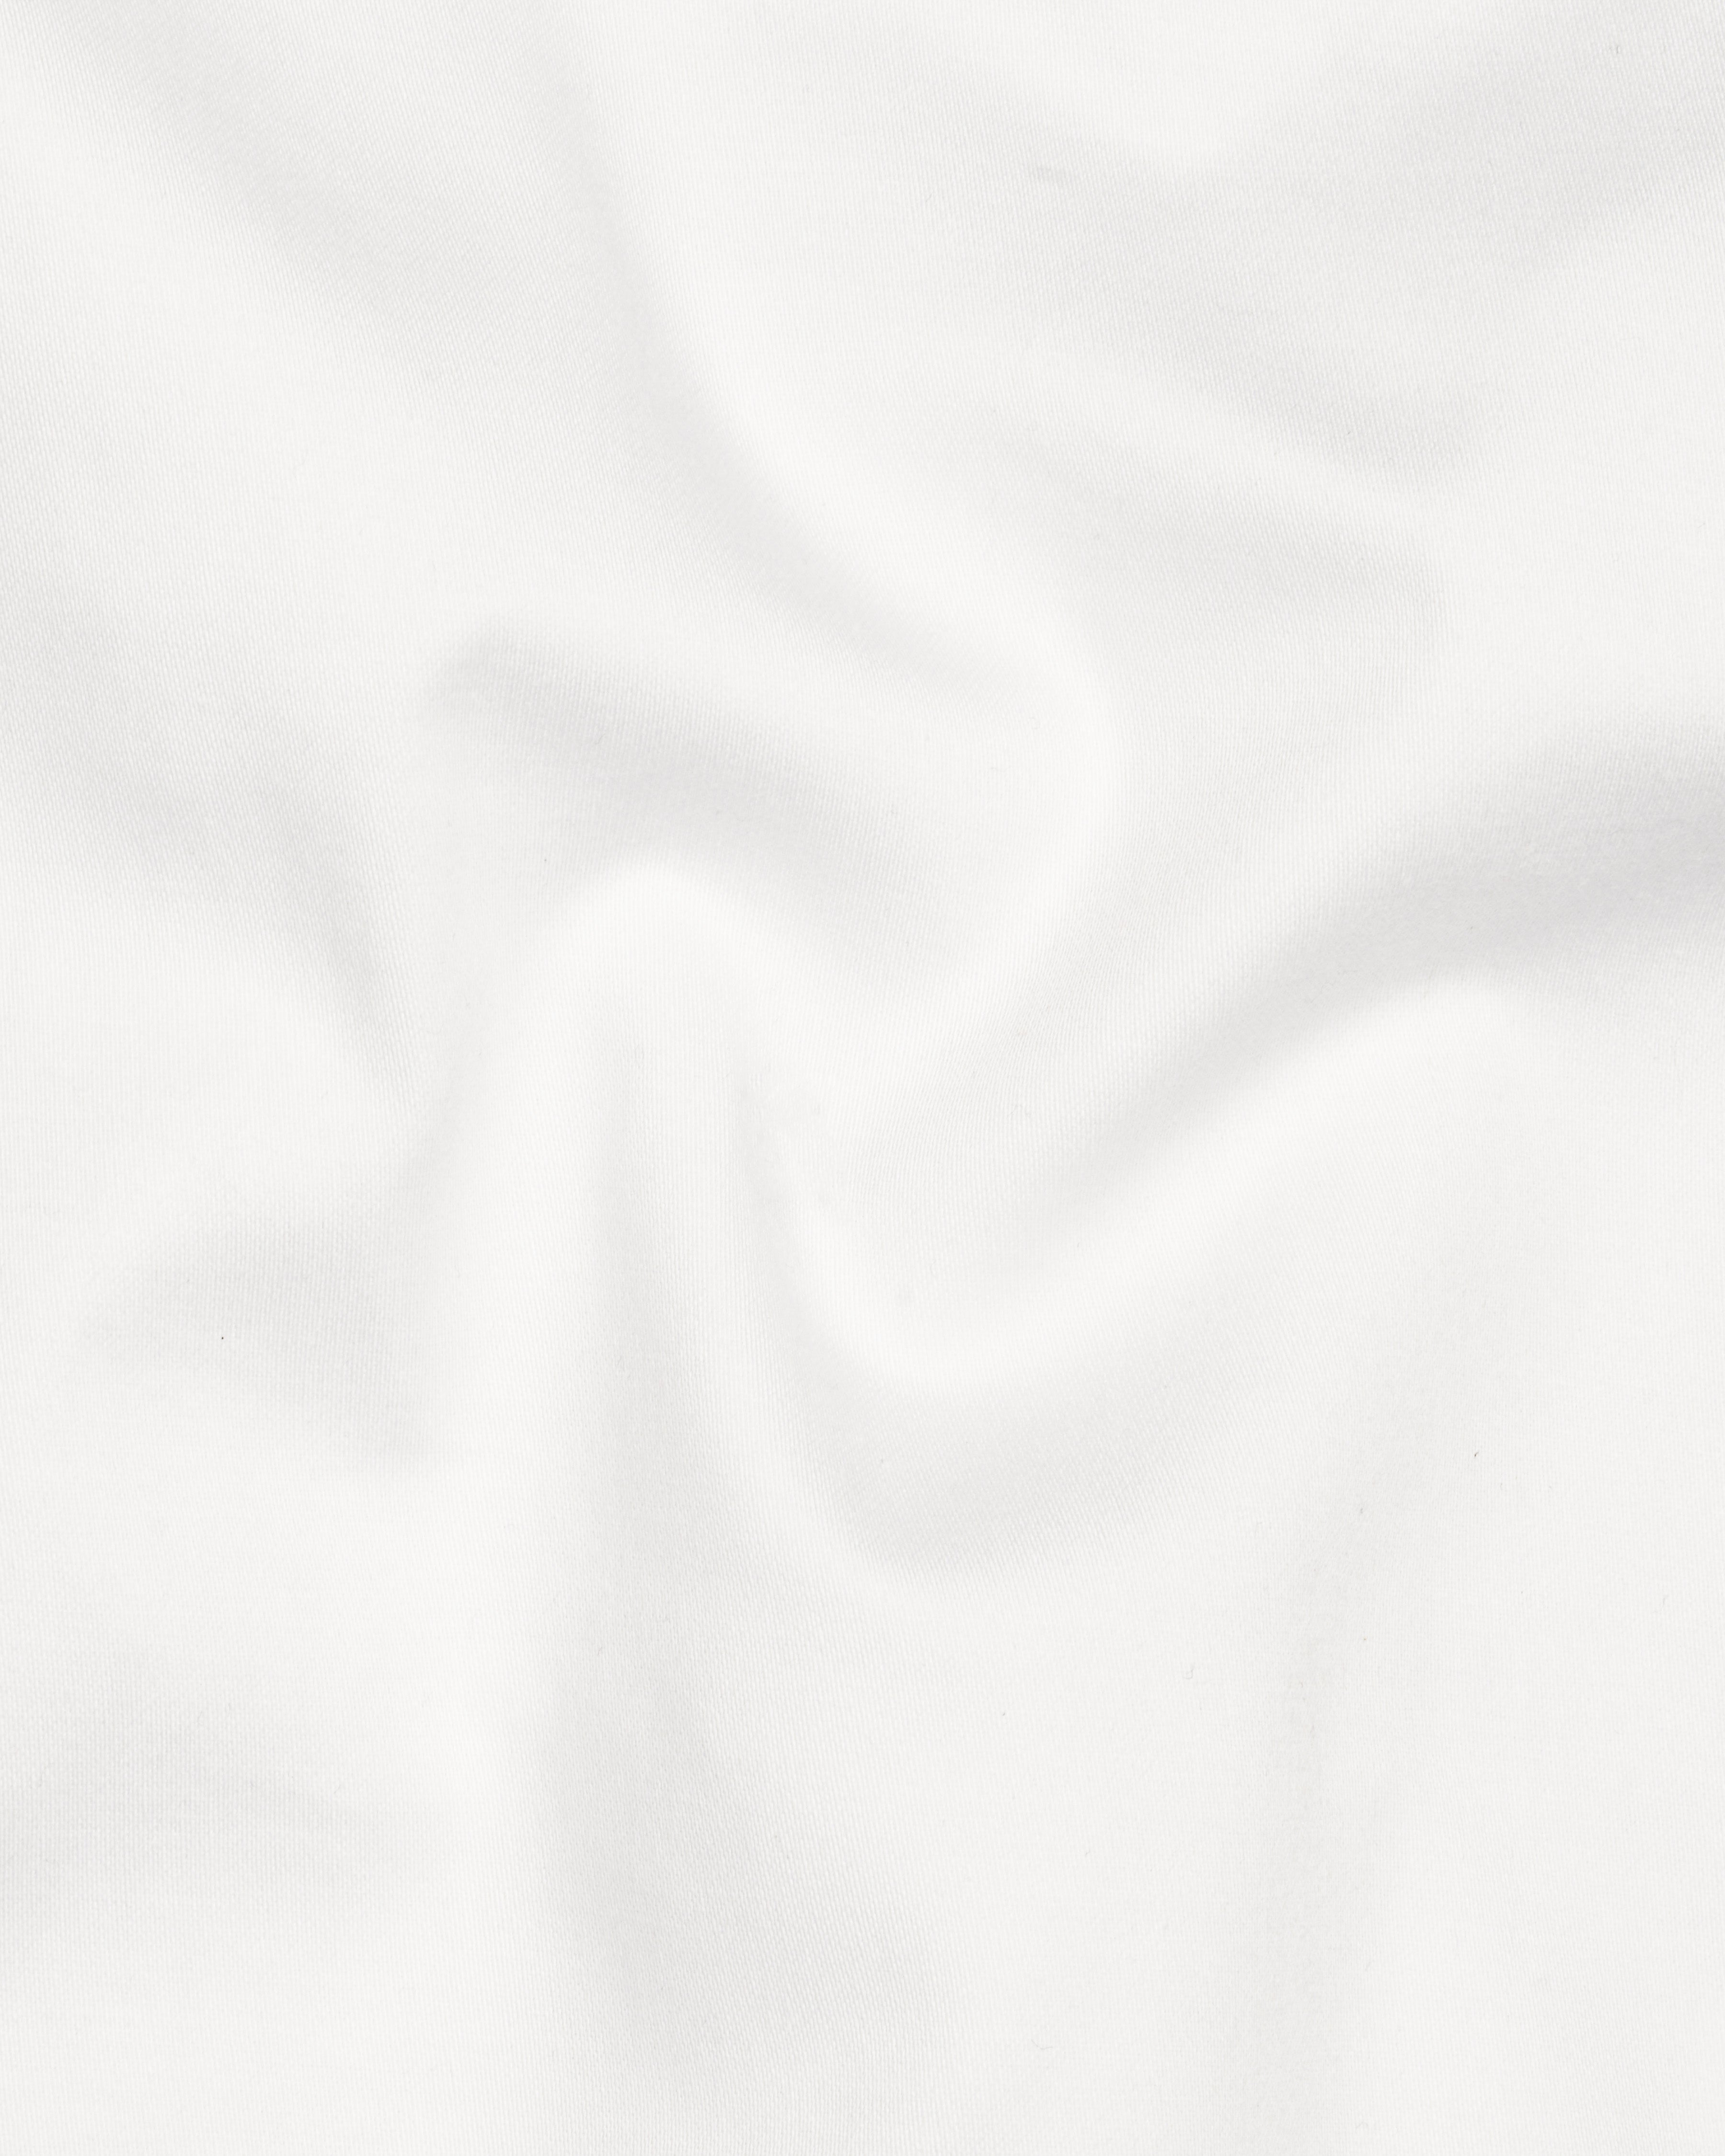 Bright White Solid Stretchable Premium Cotton traveler Pant T2632-28, T2632-30, T2632-32, T2632-34, T2632-36, T2632-38, T2632-40, T2632-42, T2632-44